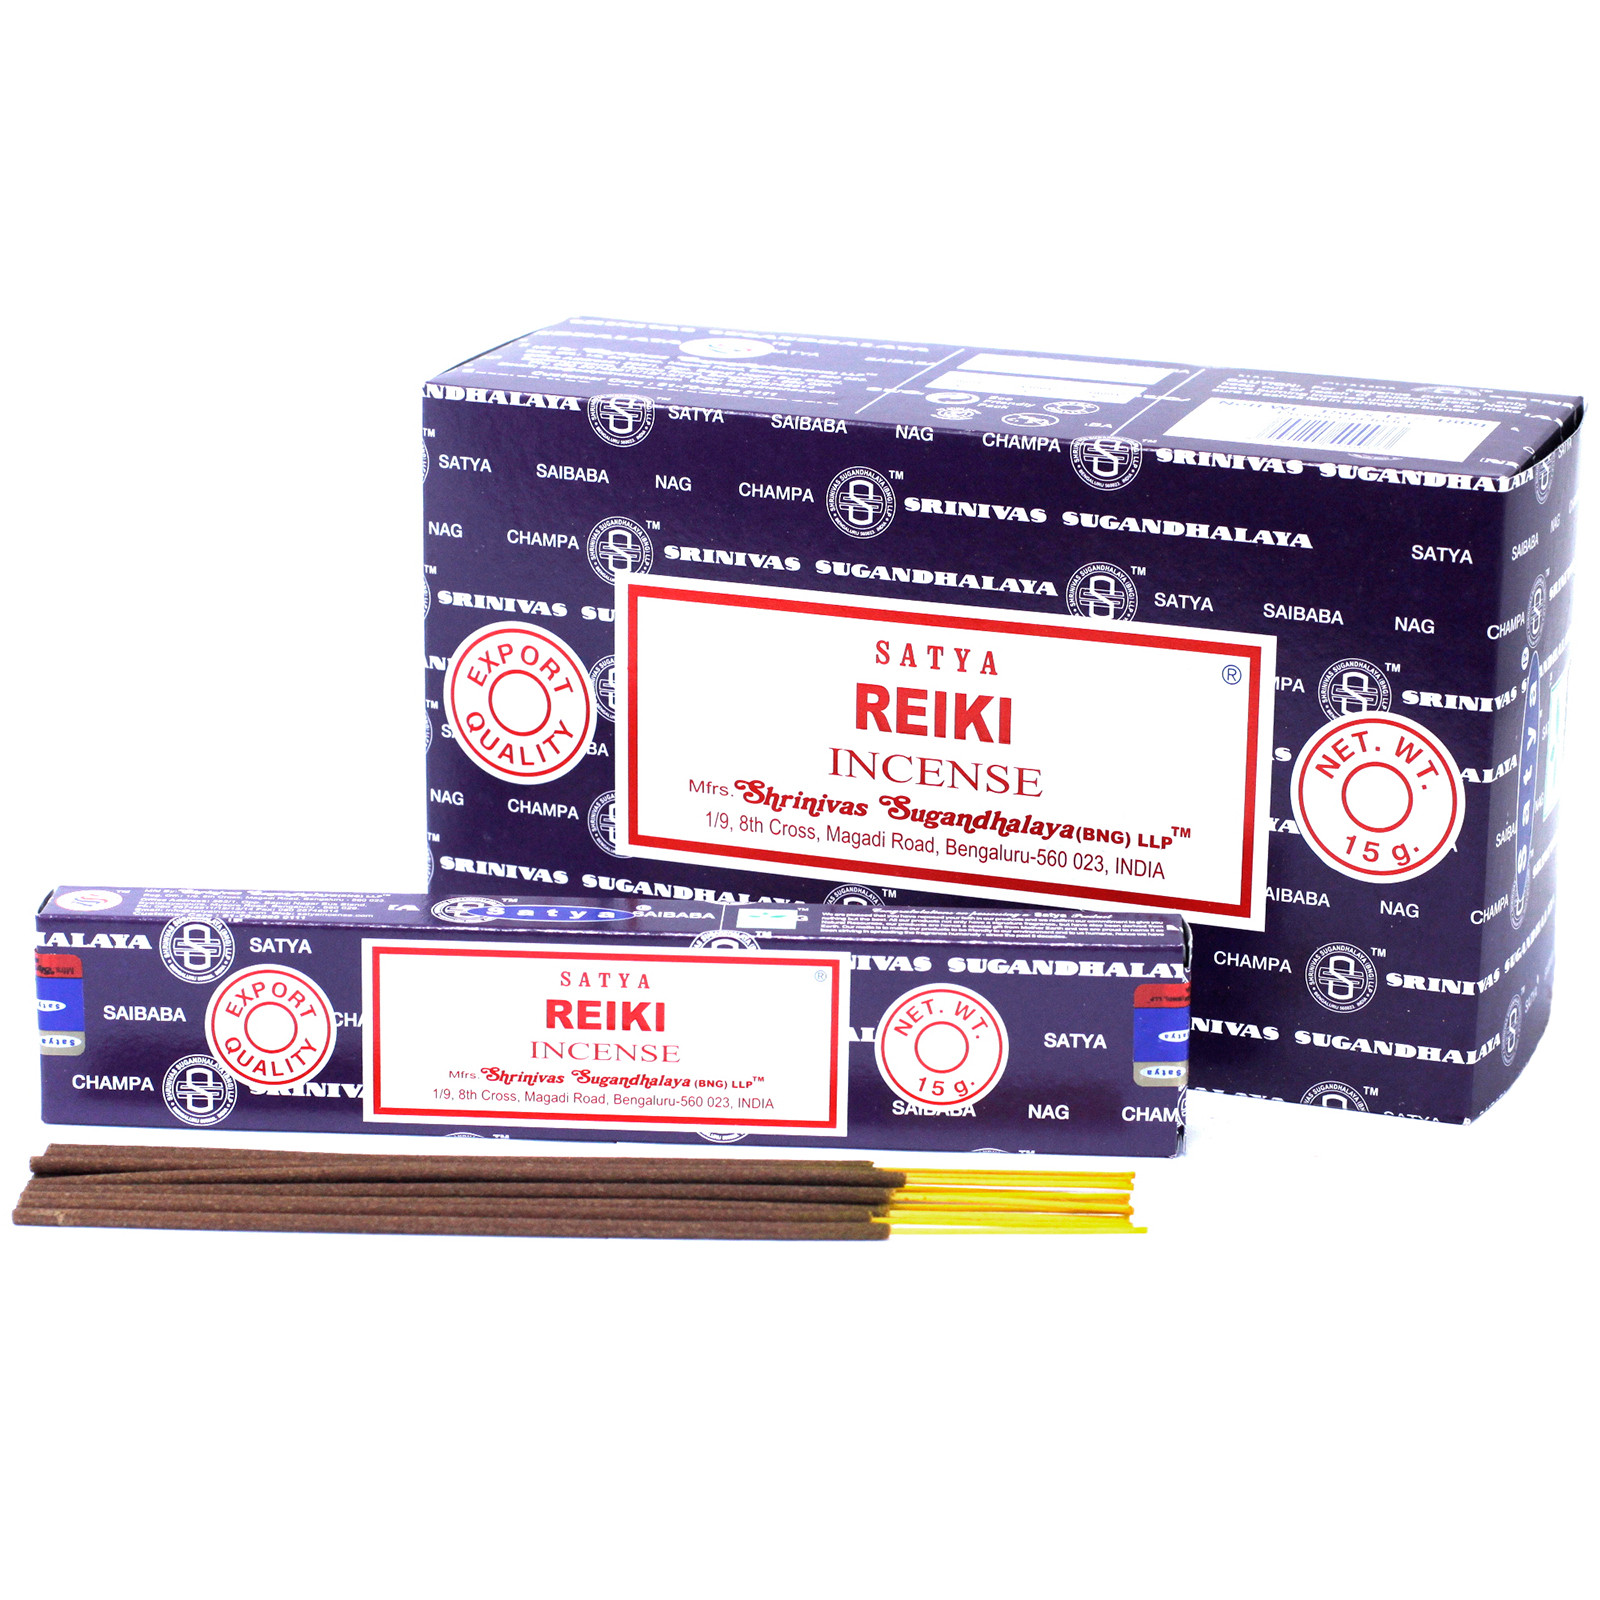 3 x 15g Packs Satya Incense Sticks - Reiki